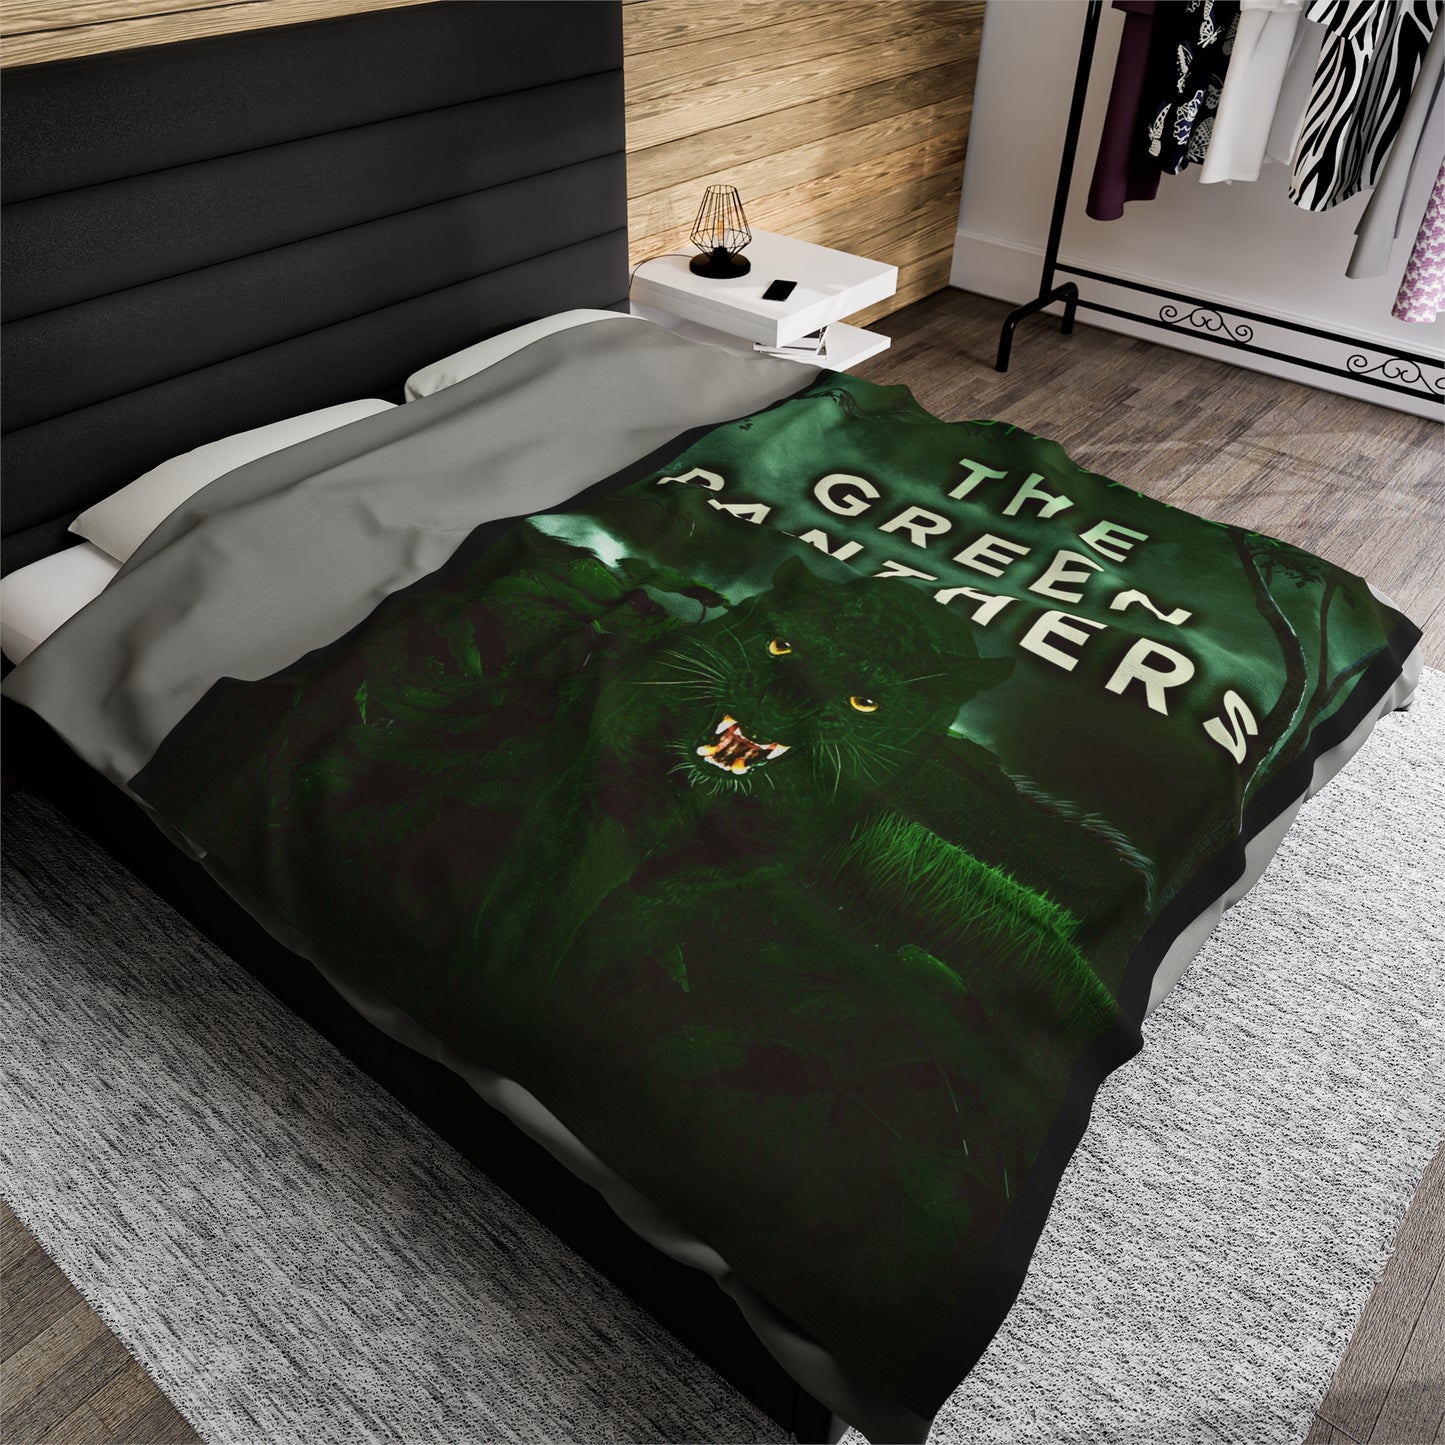 The Green Panthers - Velveteen Plush Blanket